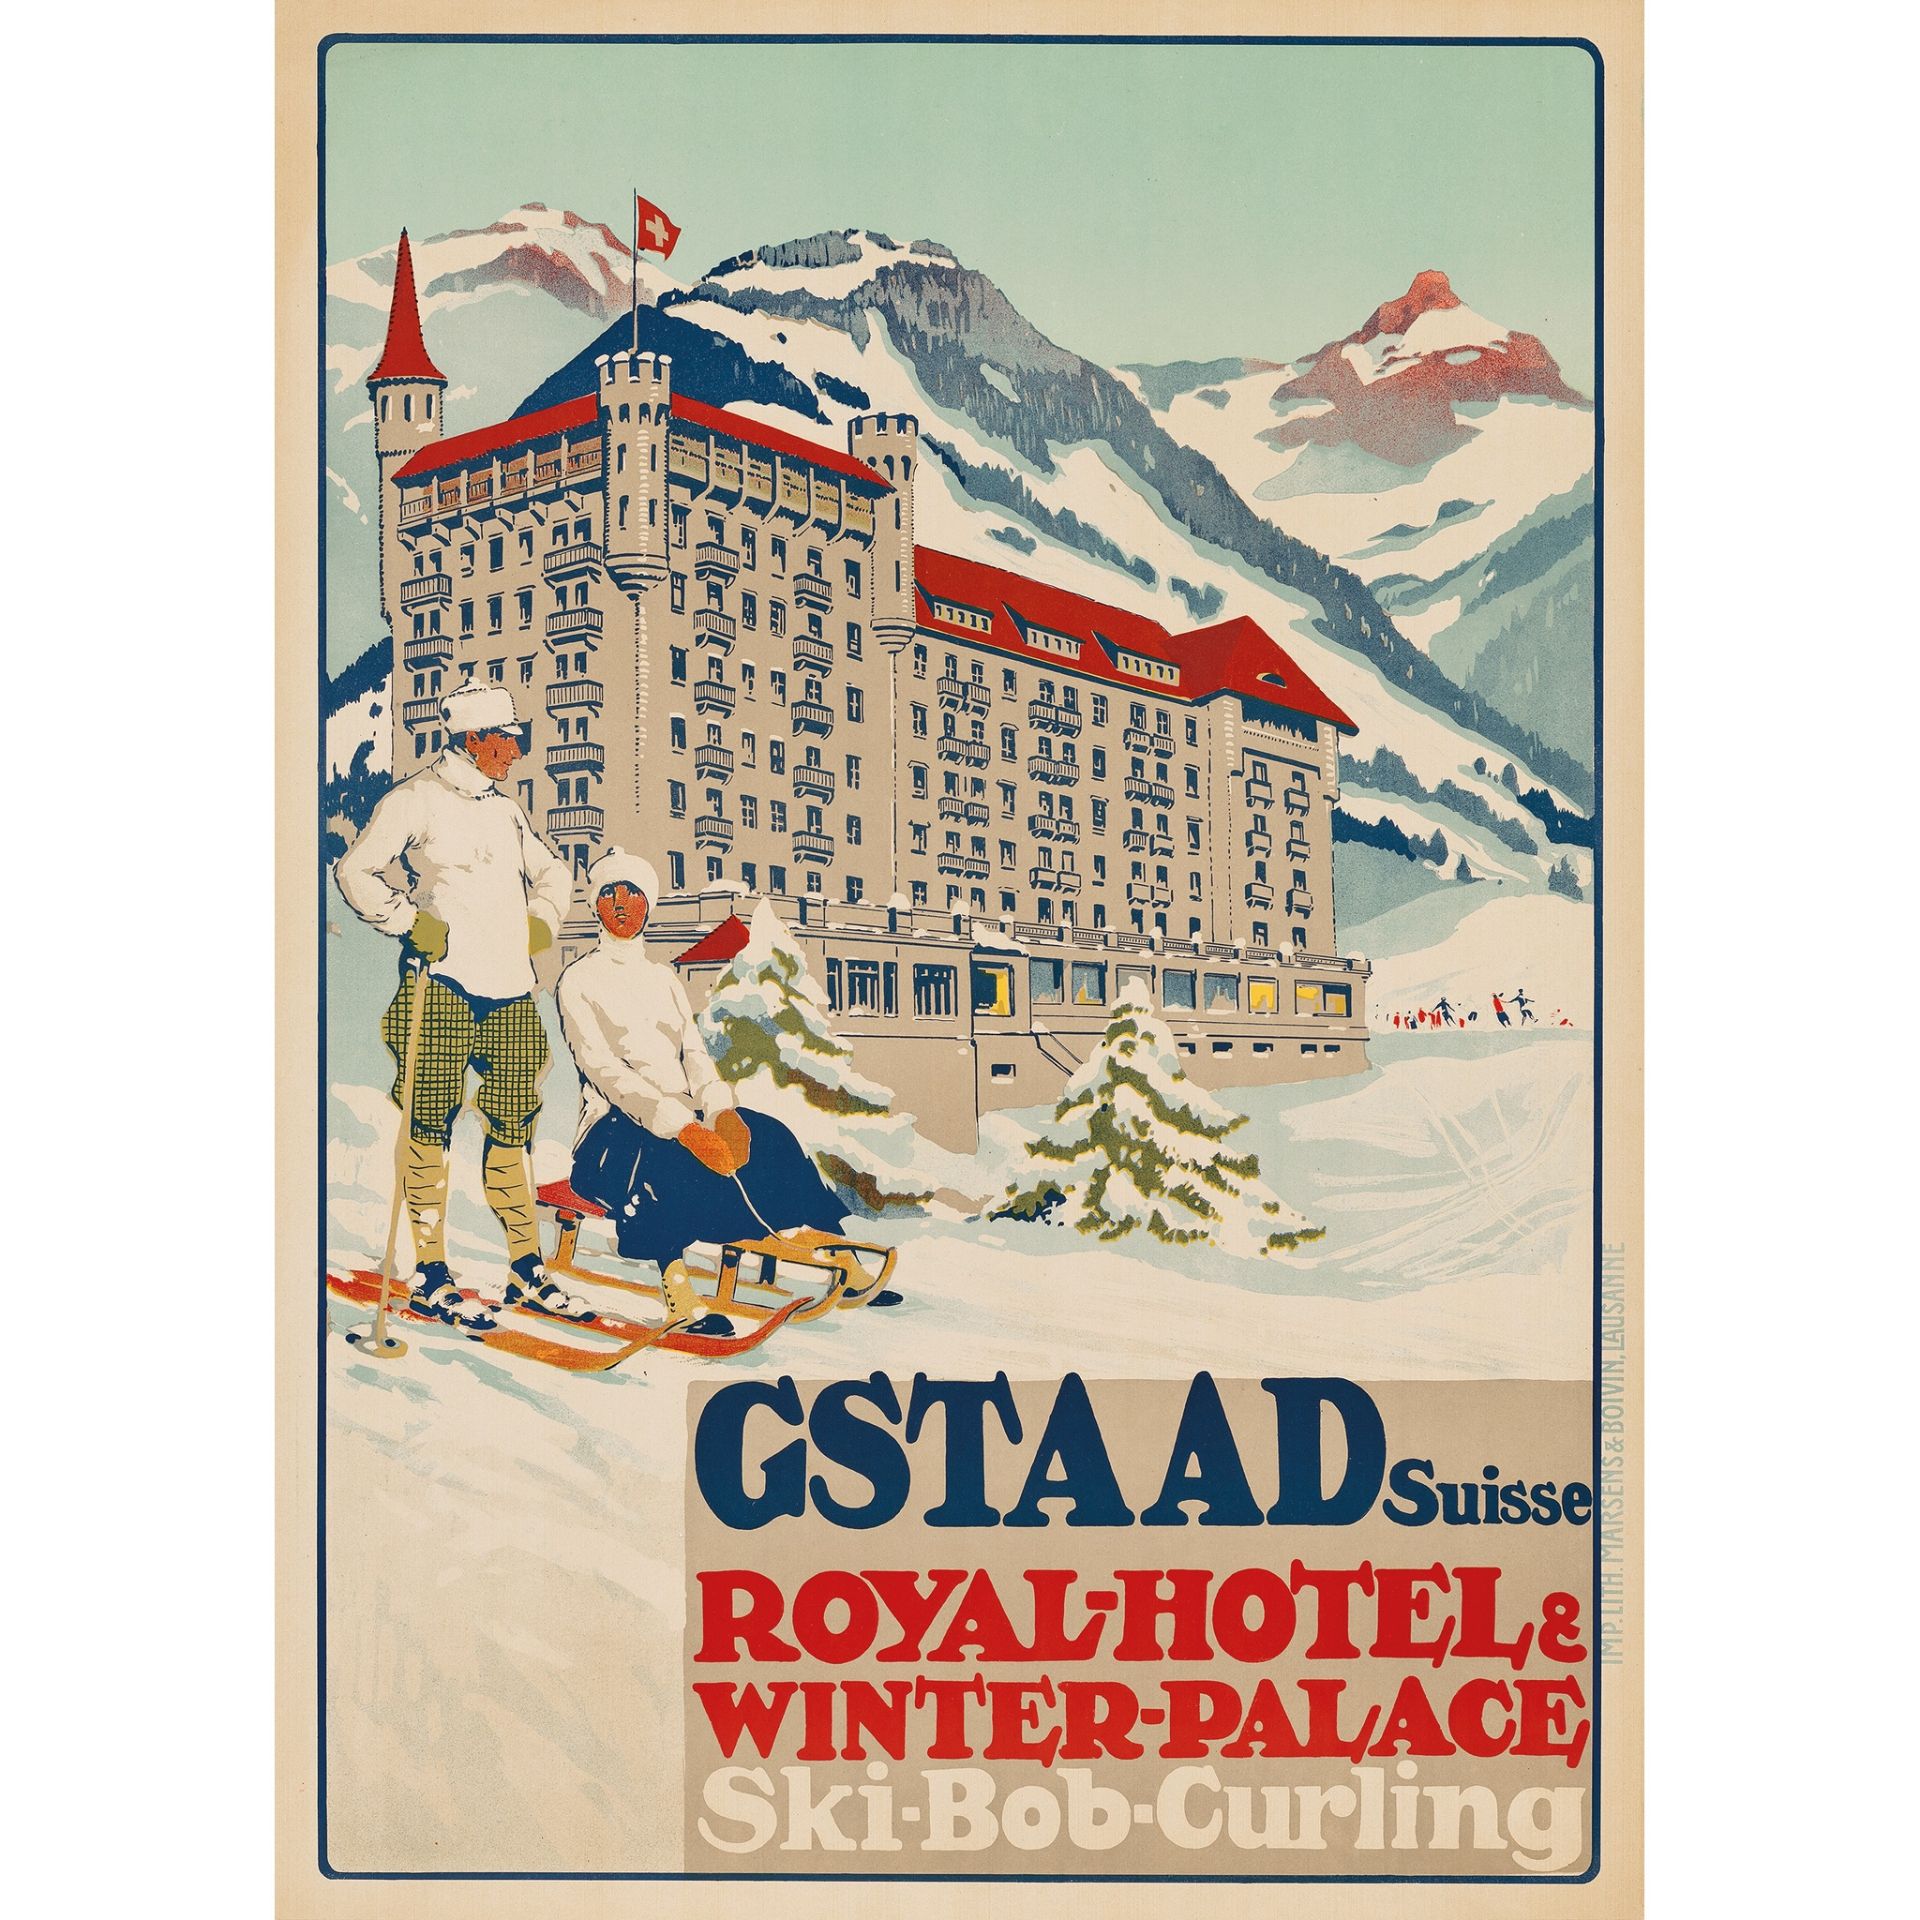 Carlo Pellegrini (1866-1937) Gstaad Royal Hotel & Winter Palace